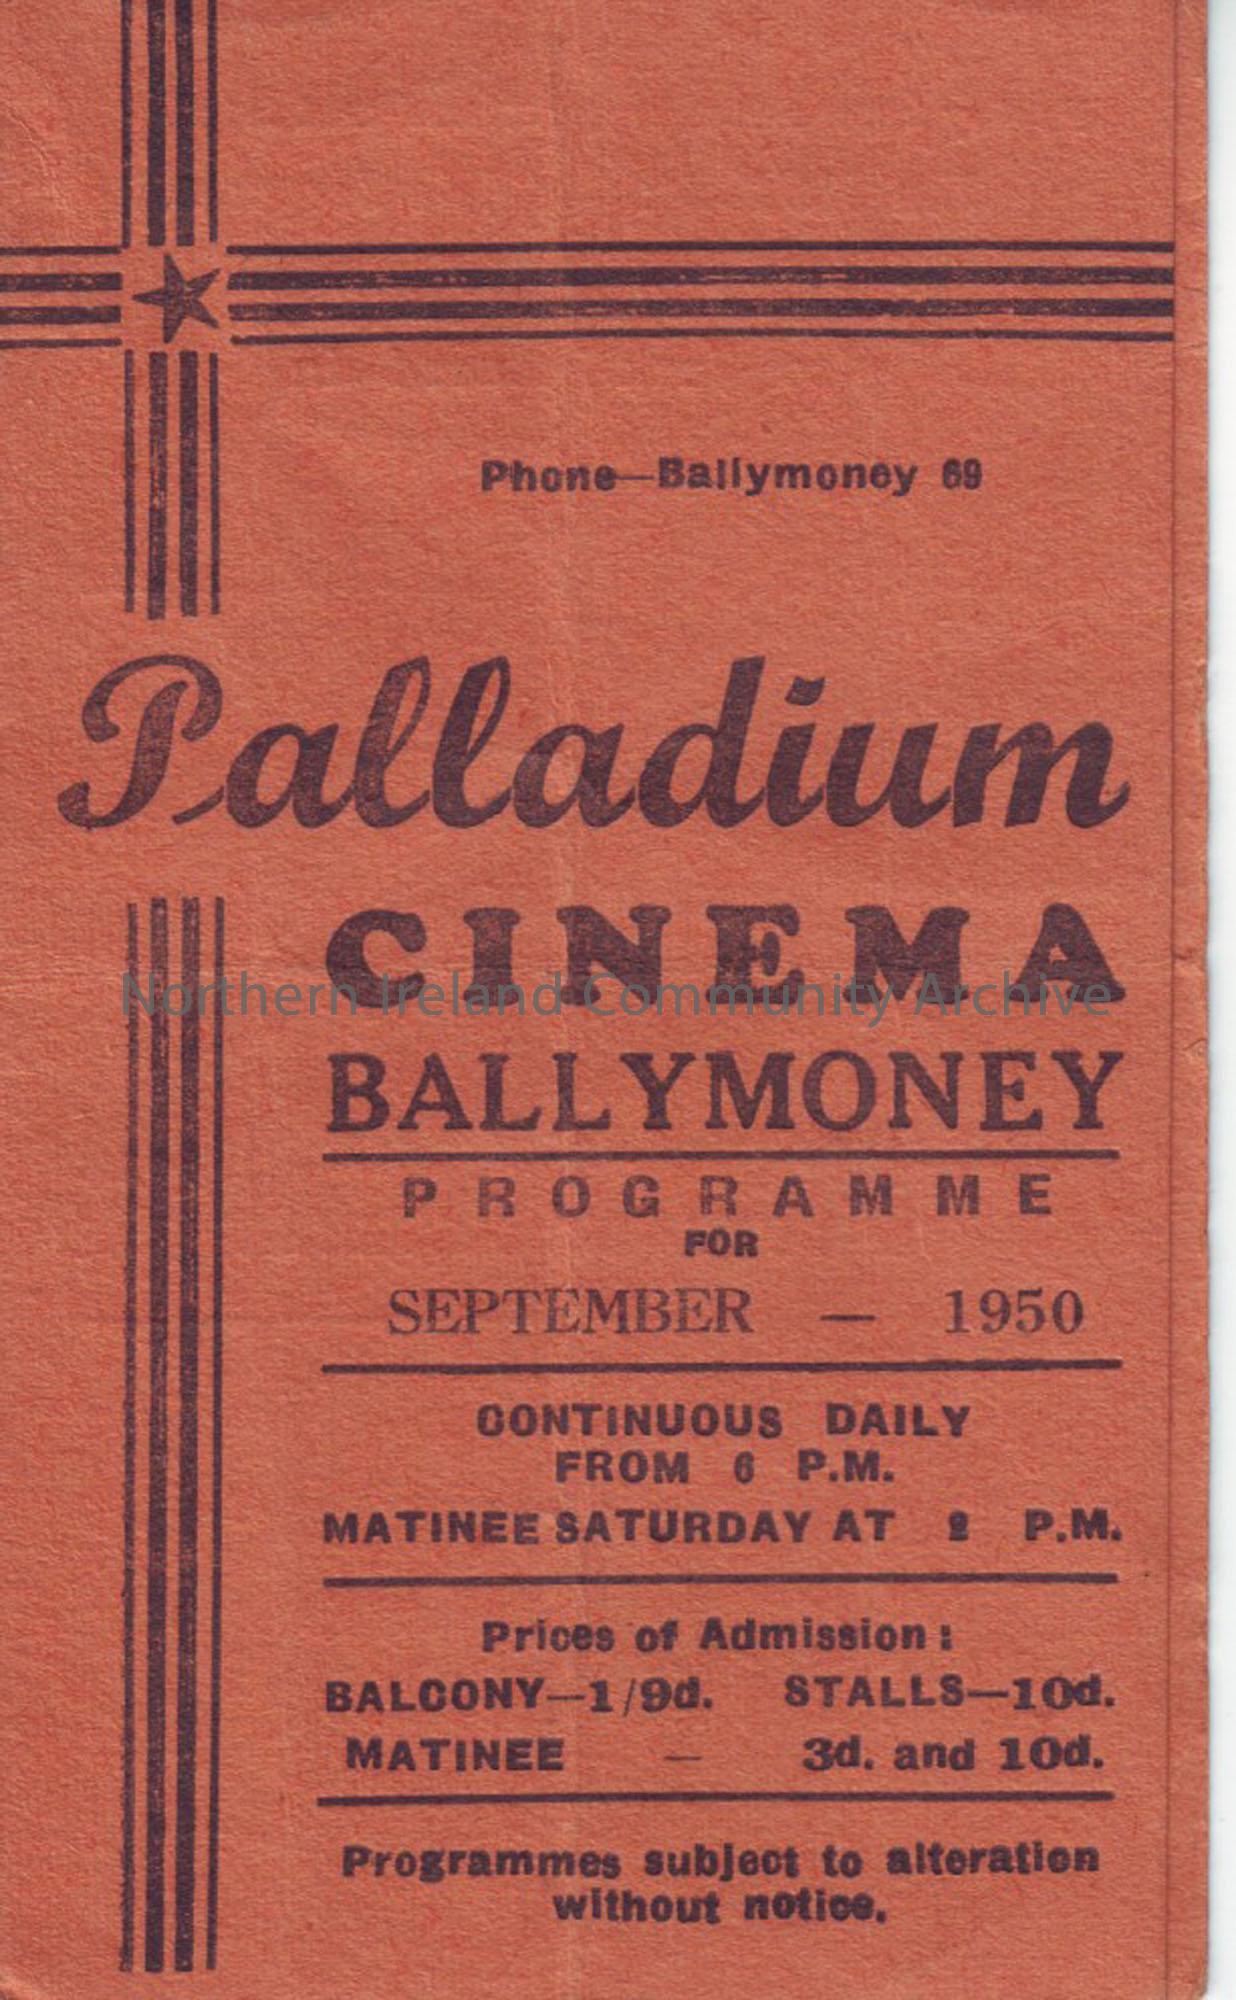 orange monthly programme for Ballymoney Palladium cinema- September 1950